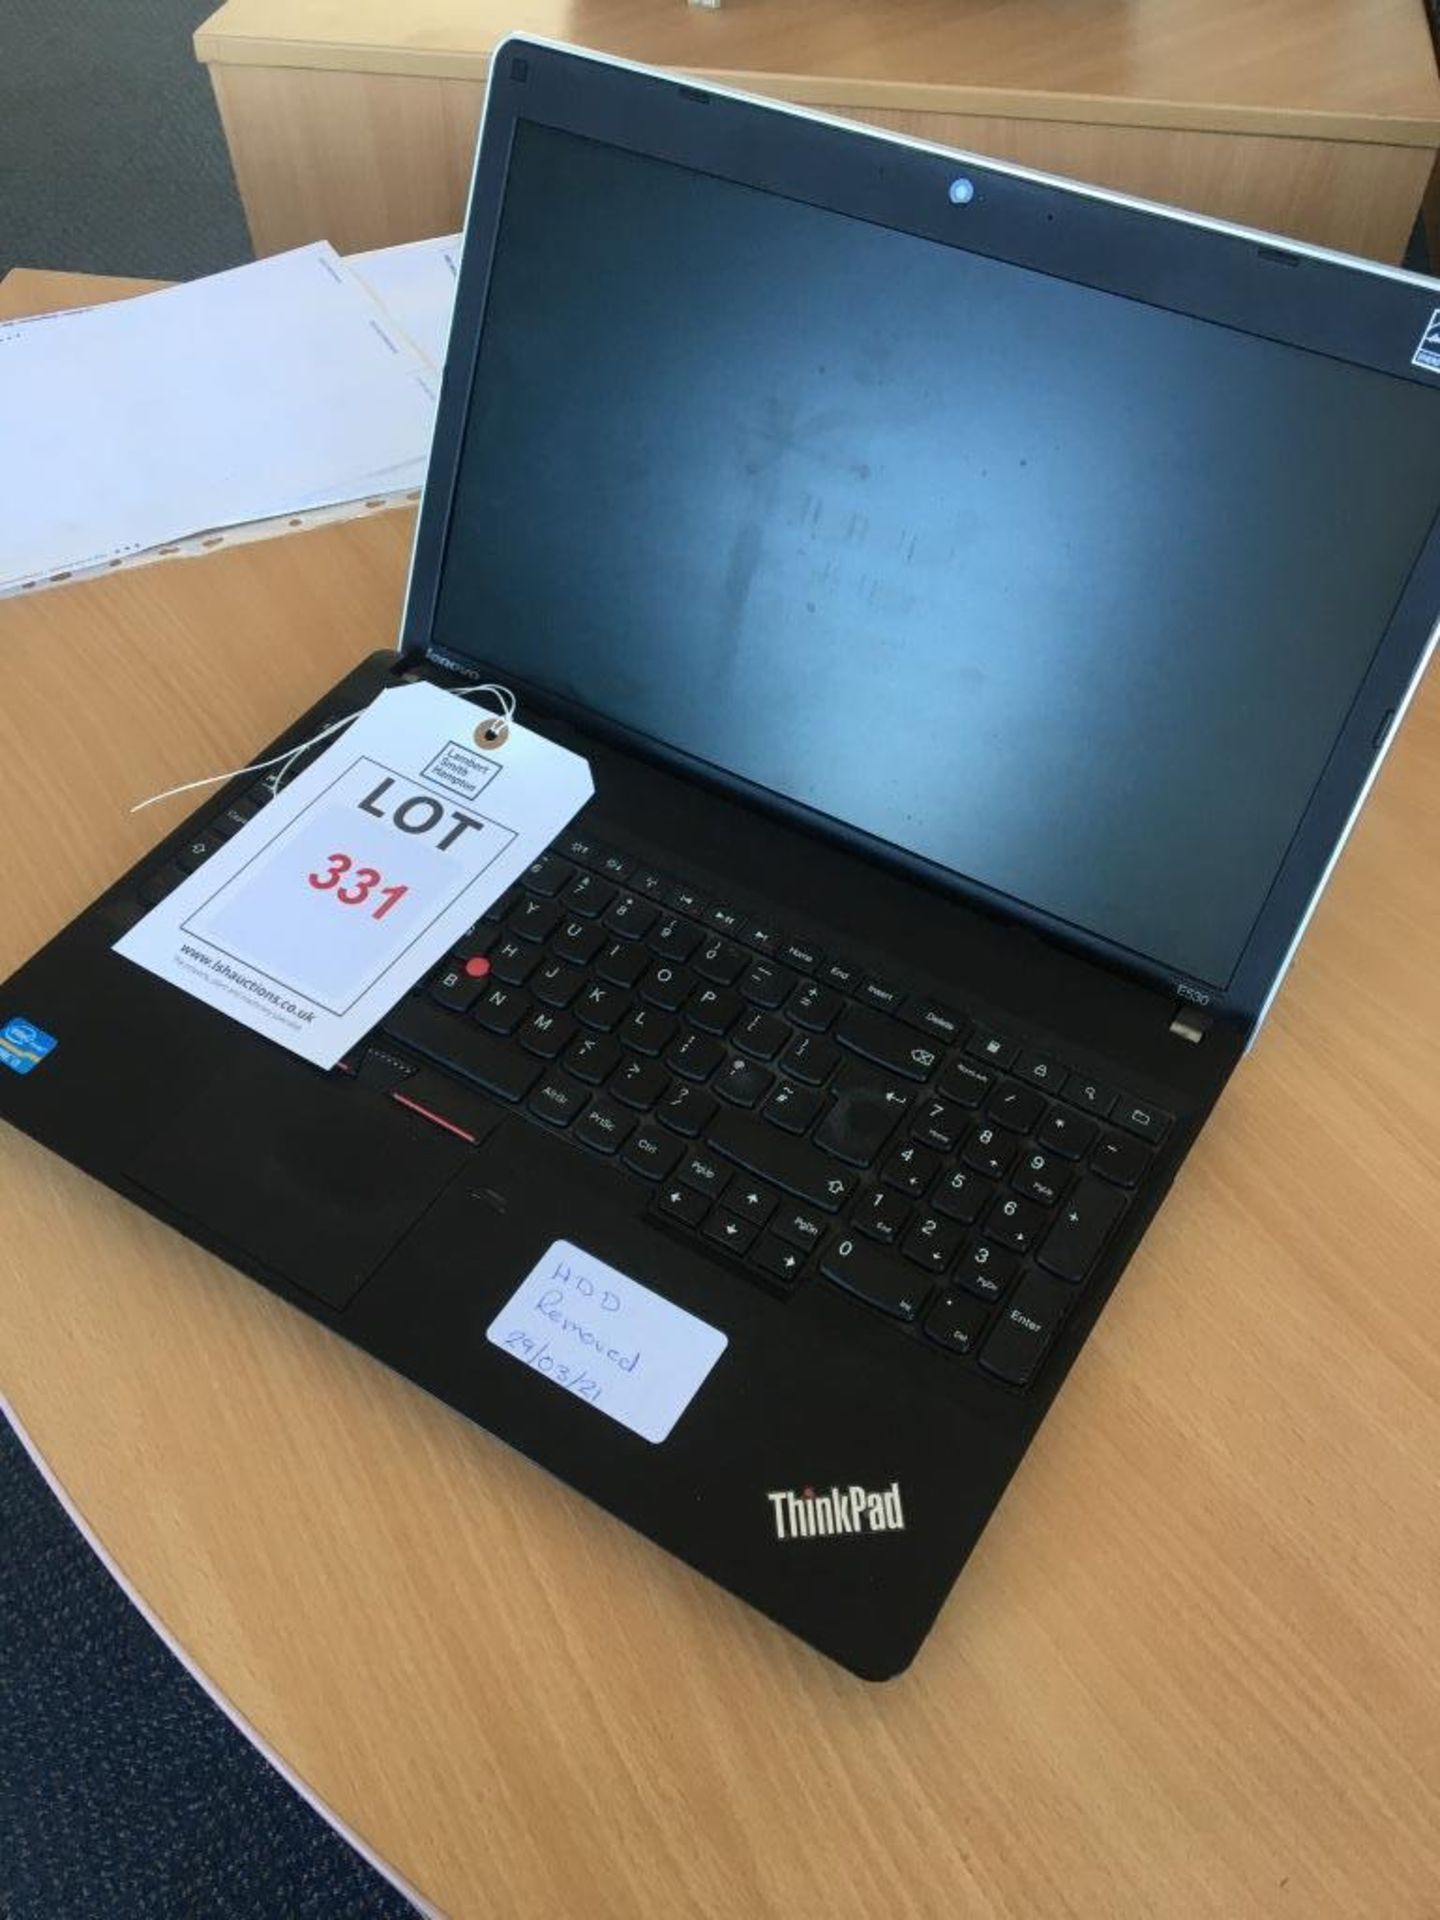 Lenovo ThinkPad Edge E530 laptop computer, YOM: 2018 (Windows Pro 8, Intel i5 processor) Please - Image 2 of 3